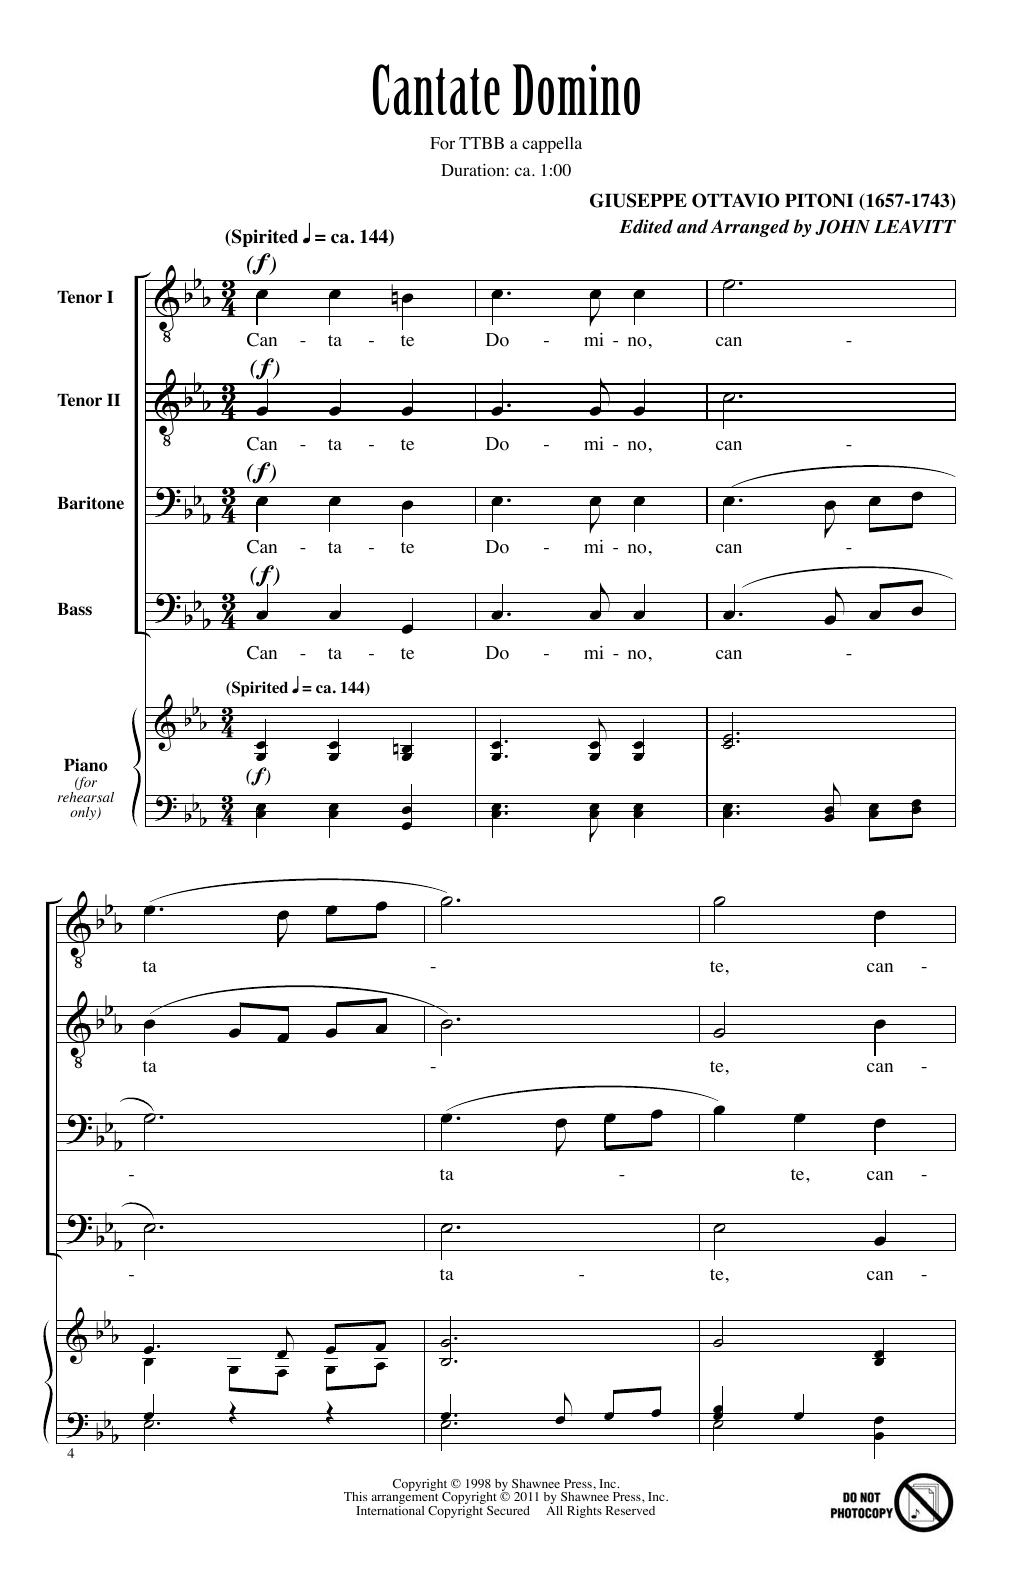 John Leavitt Cantate Domino Sheet Music Notes & Chords for TTBB - Download or Print PDF